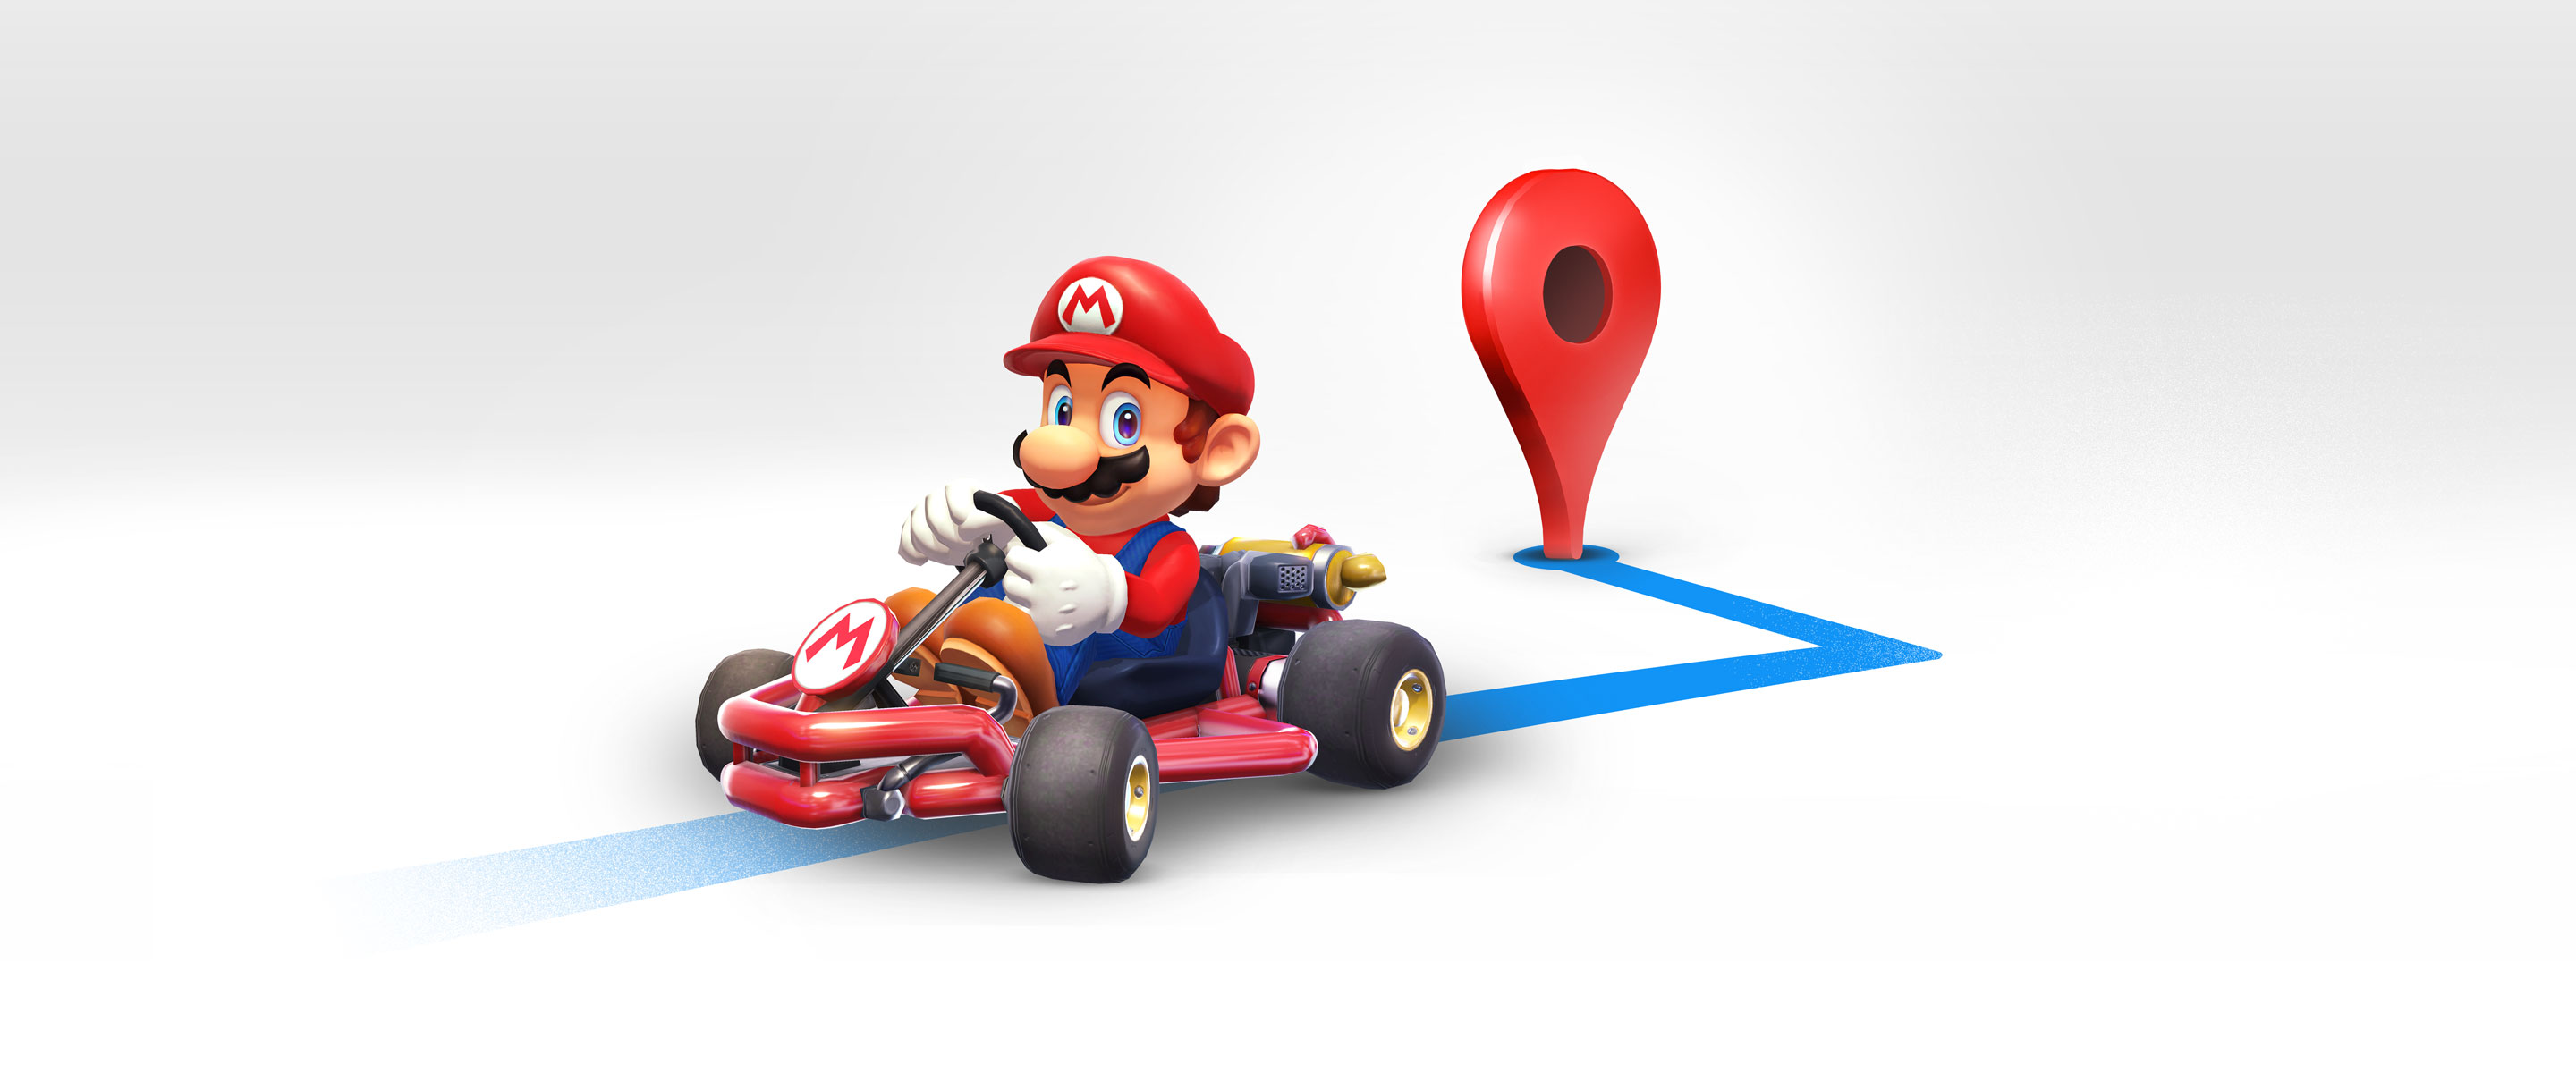 Nintendo could bring Mario Kart to PC thanks to Google